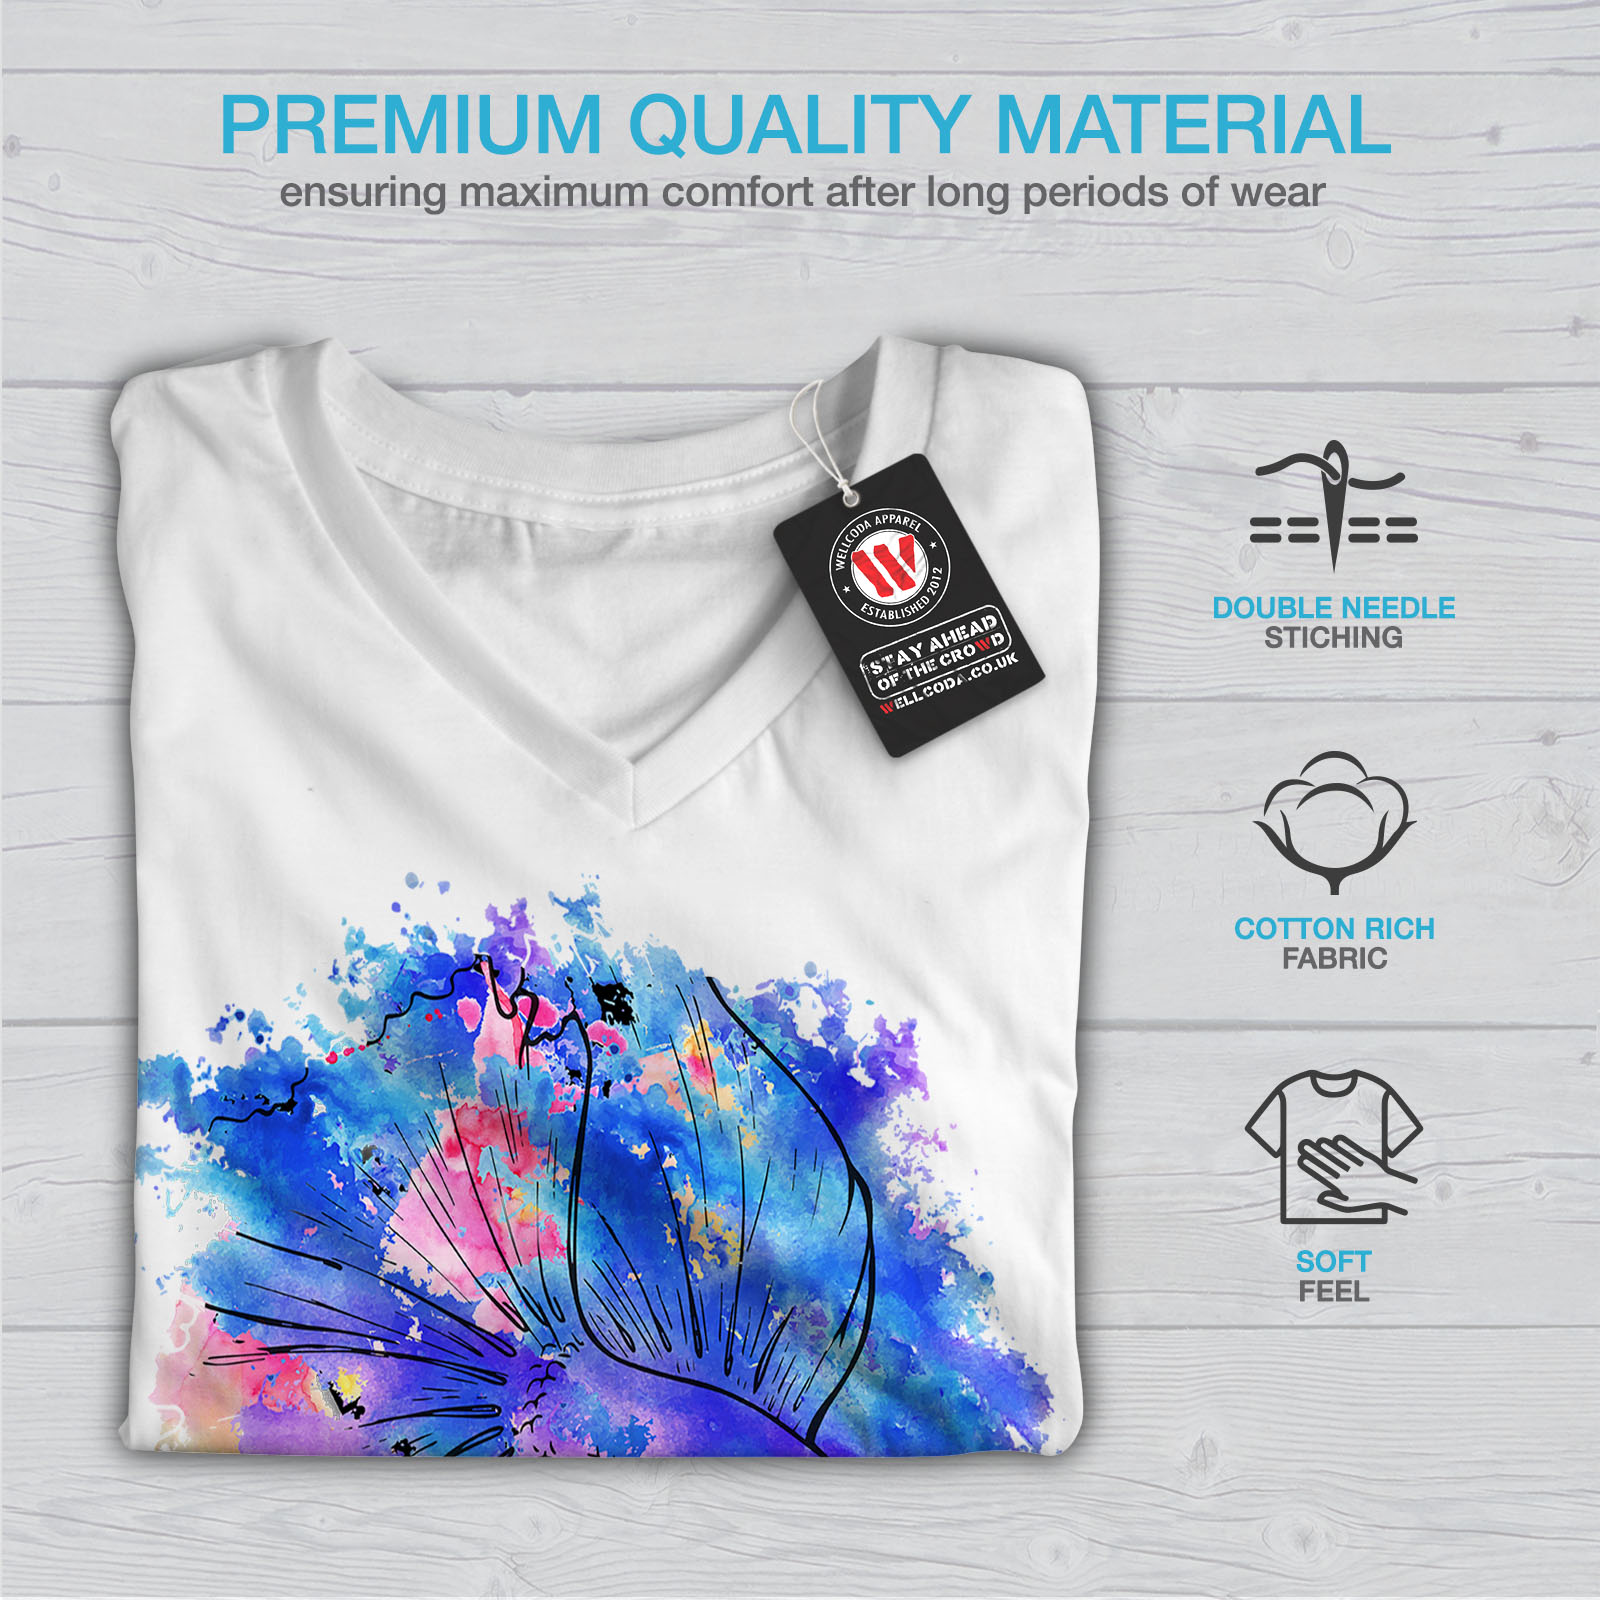 Wellcoda Animal Cool Poisson Femme T-Shirt col V couleur de conception graphique Tee